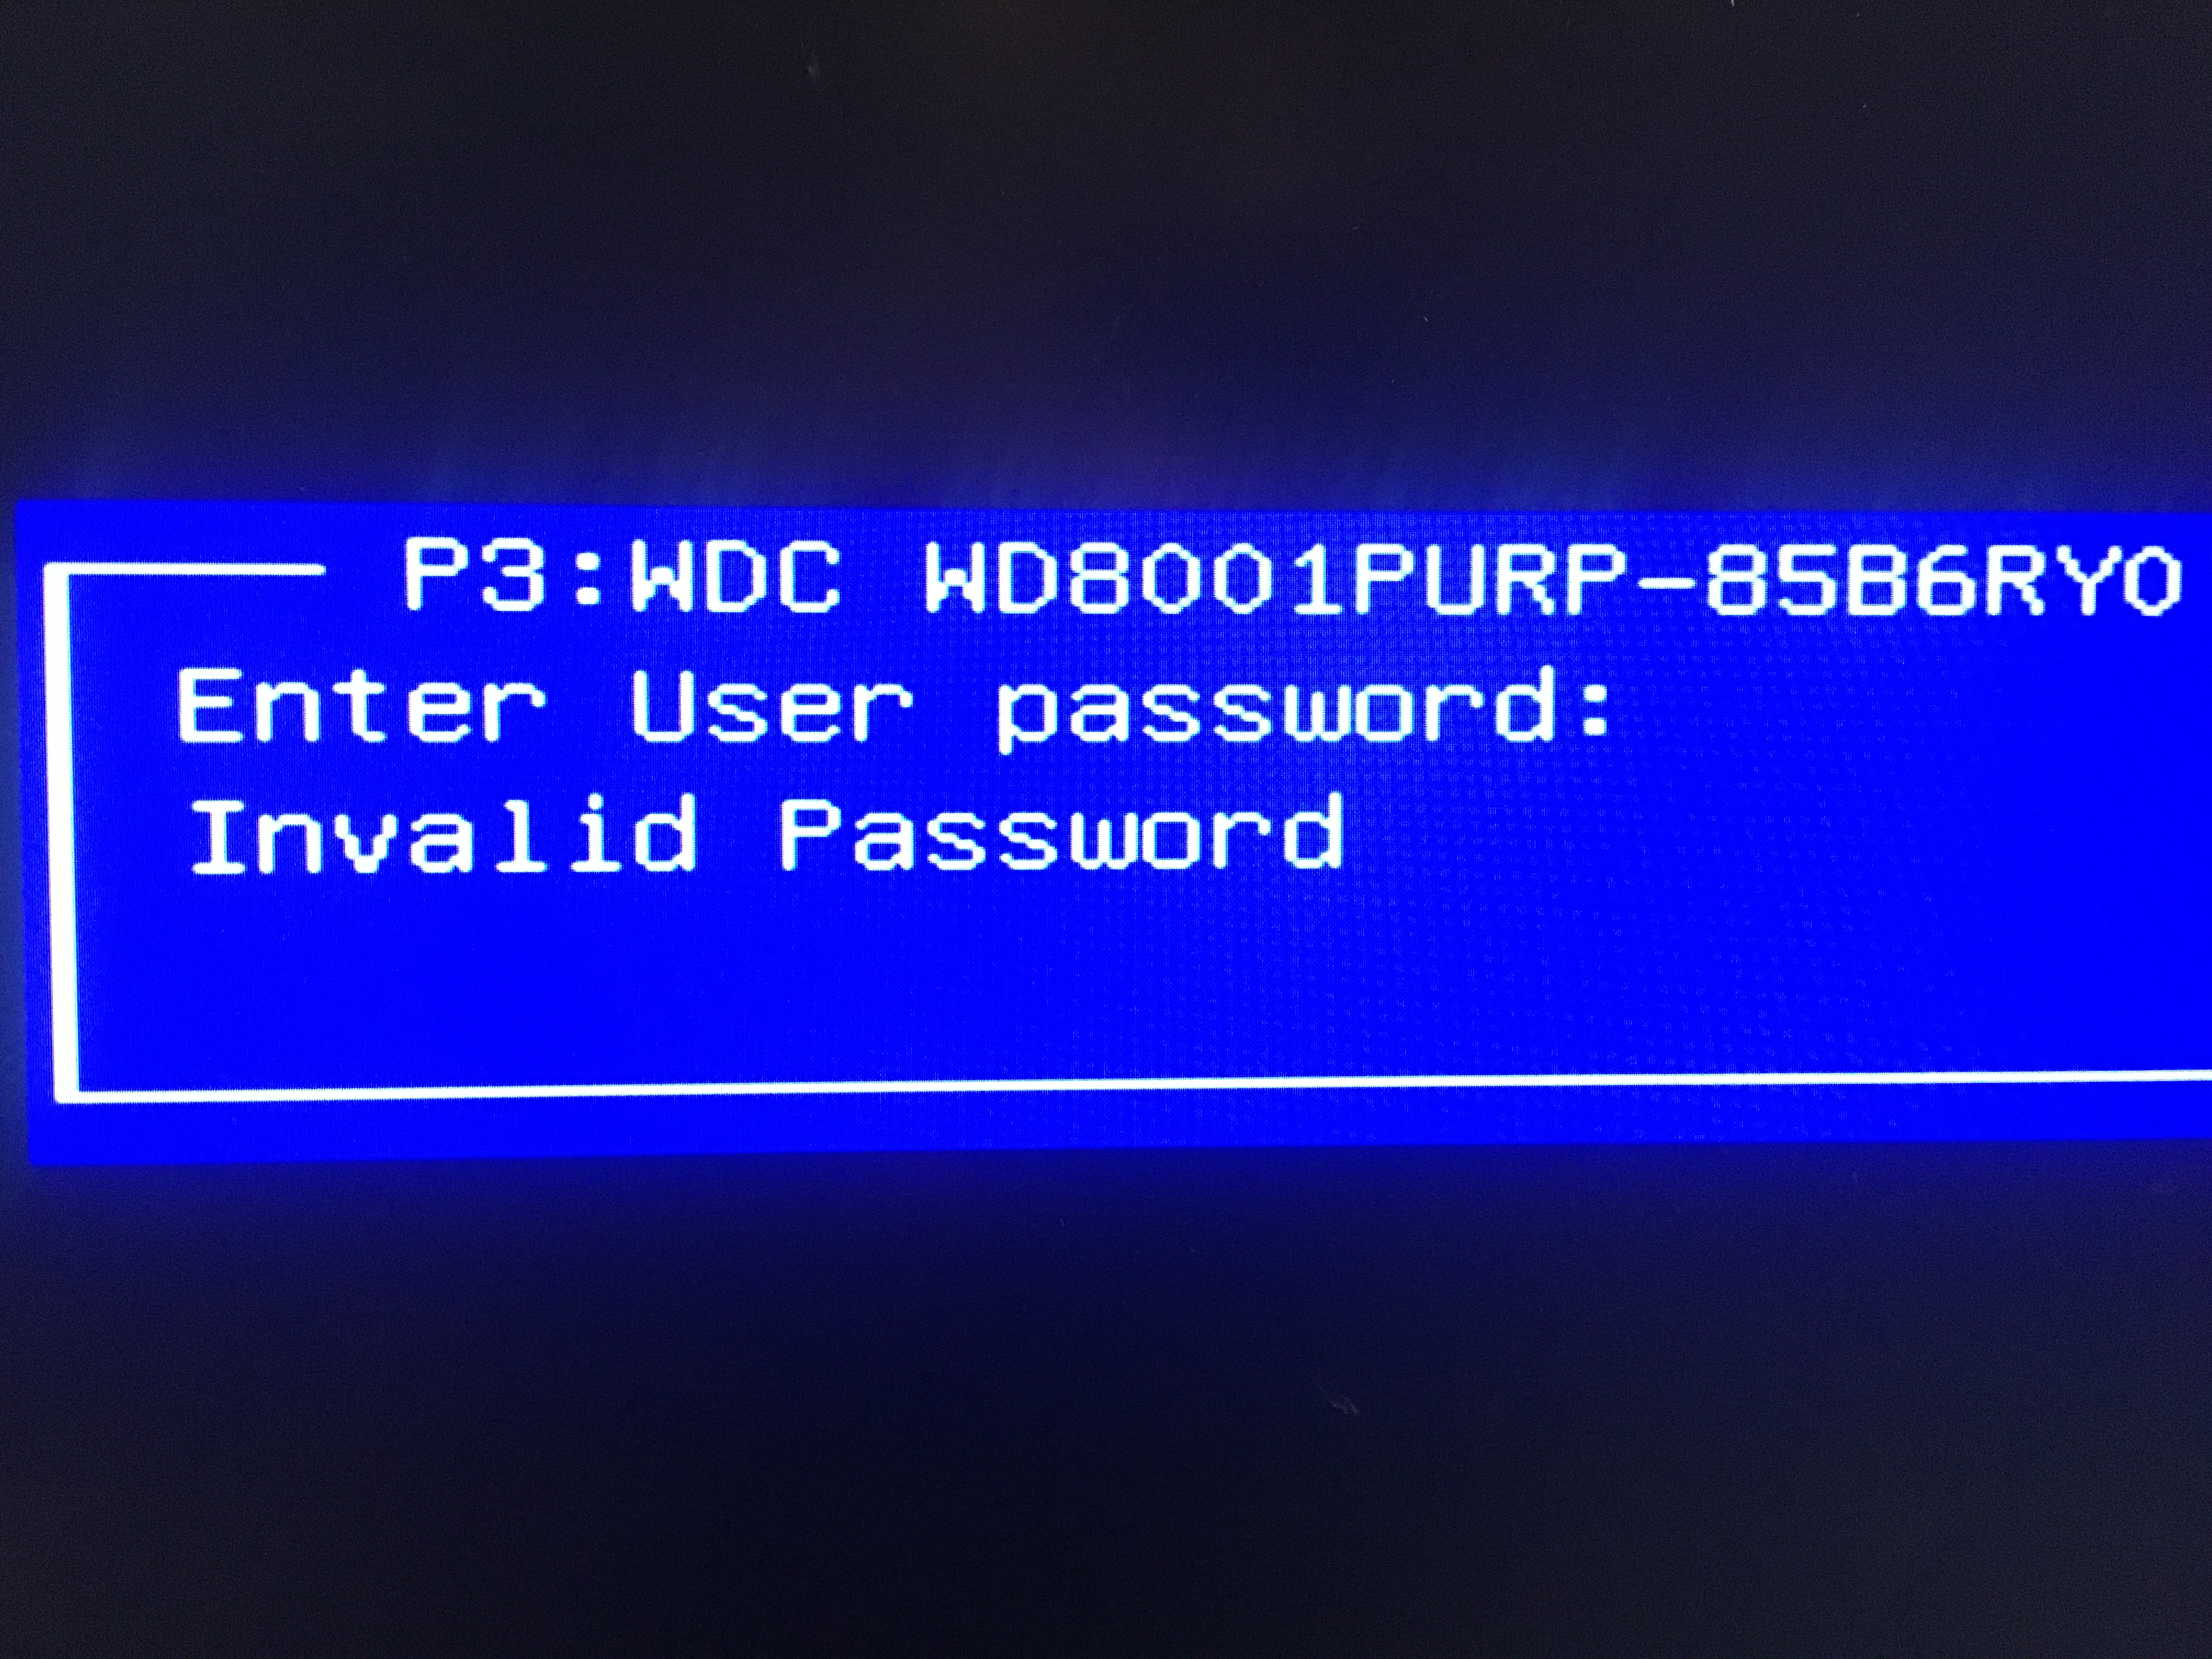 Western Digital Purple drive asking for password